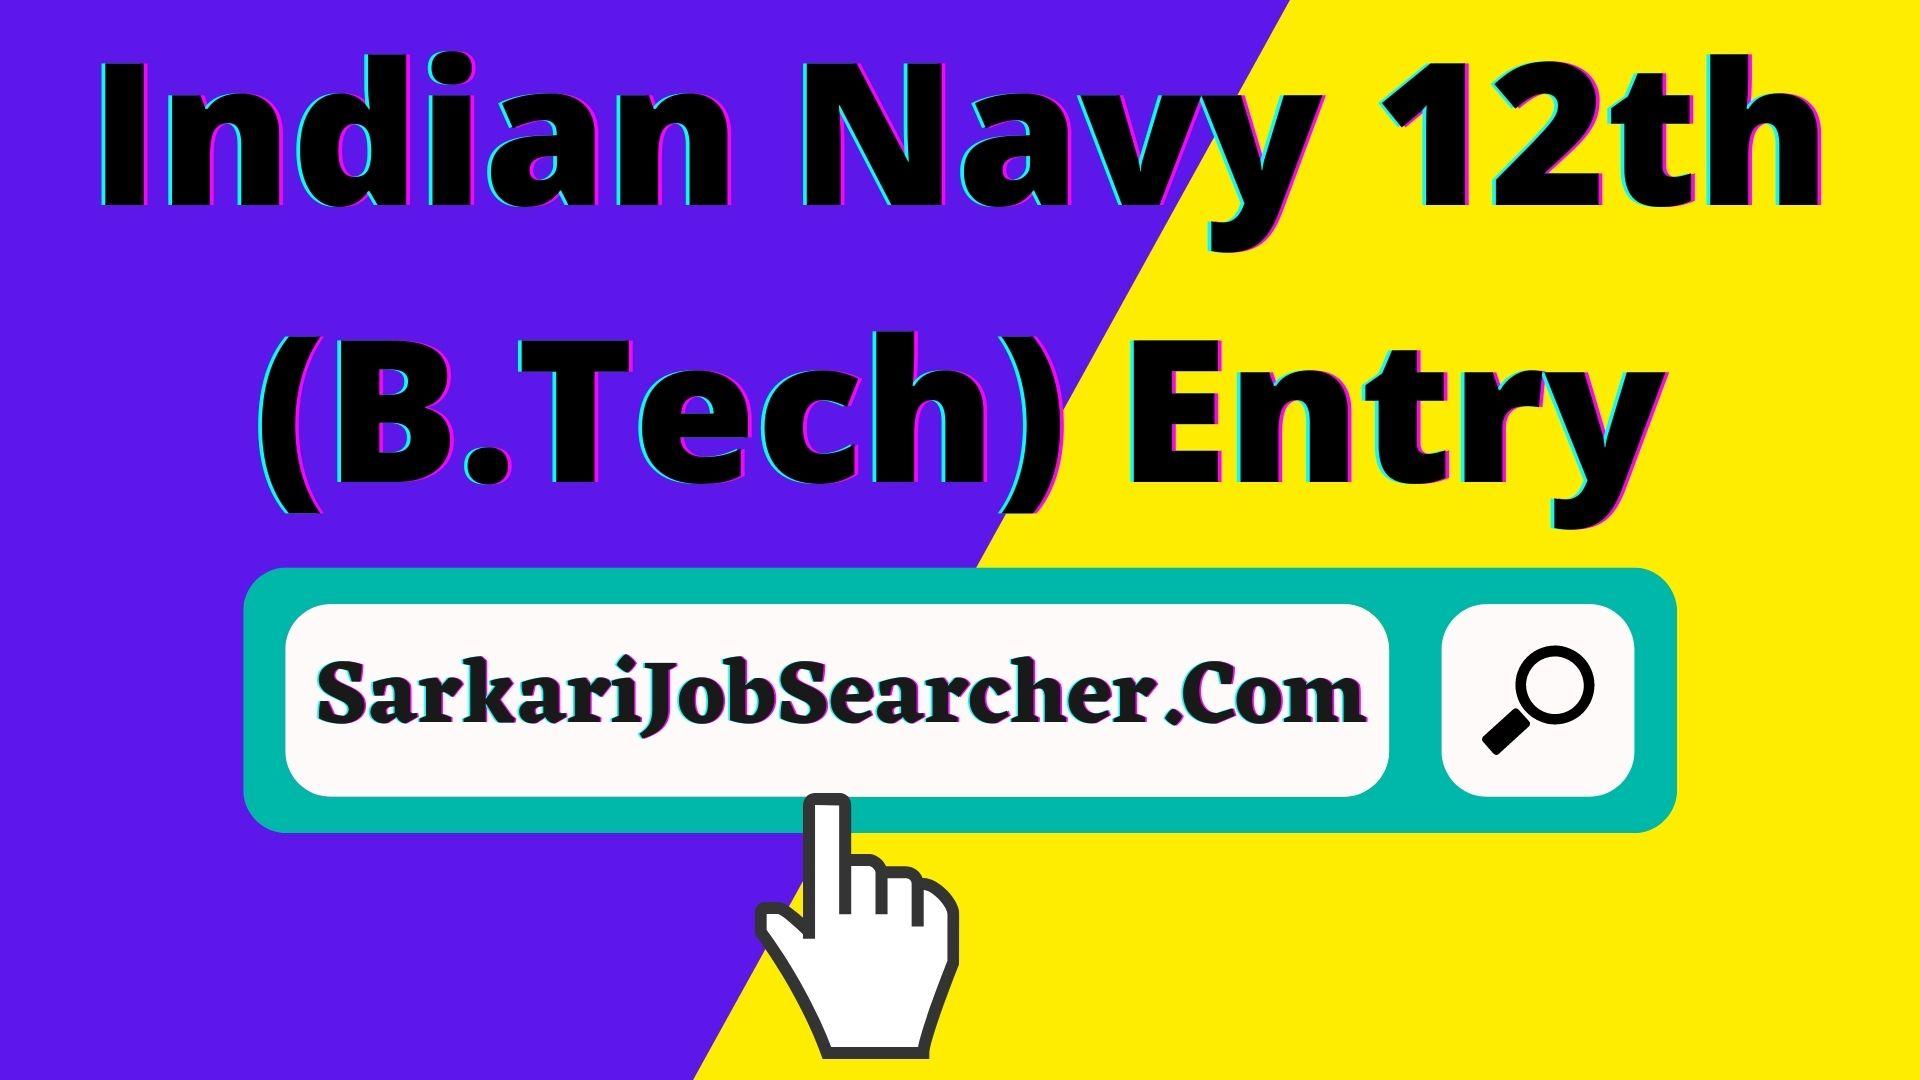 Indian Navy 12th B Tech Entry